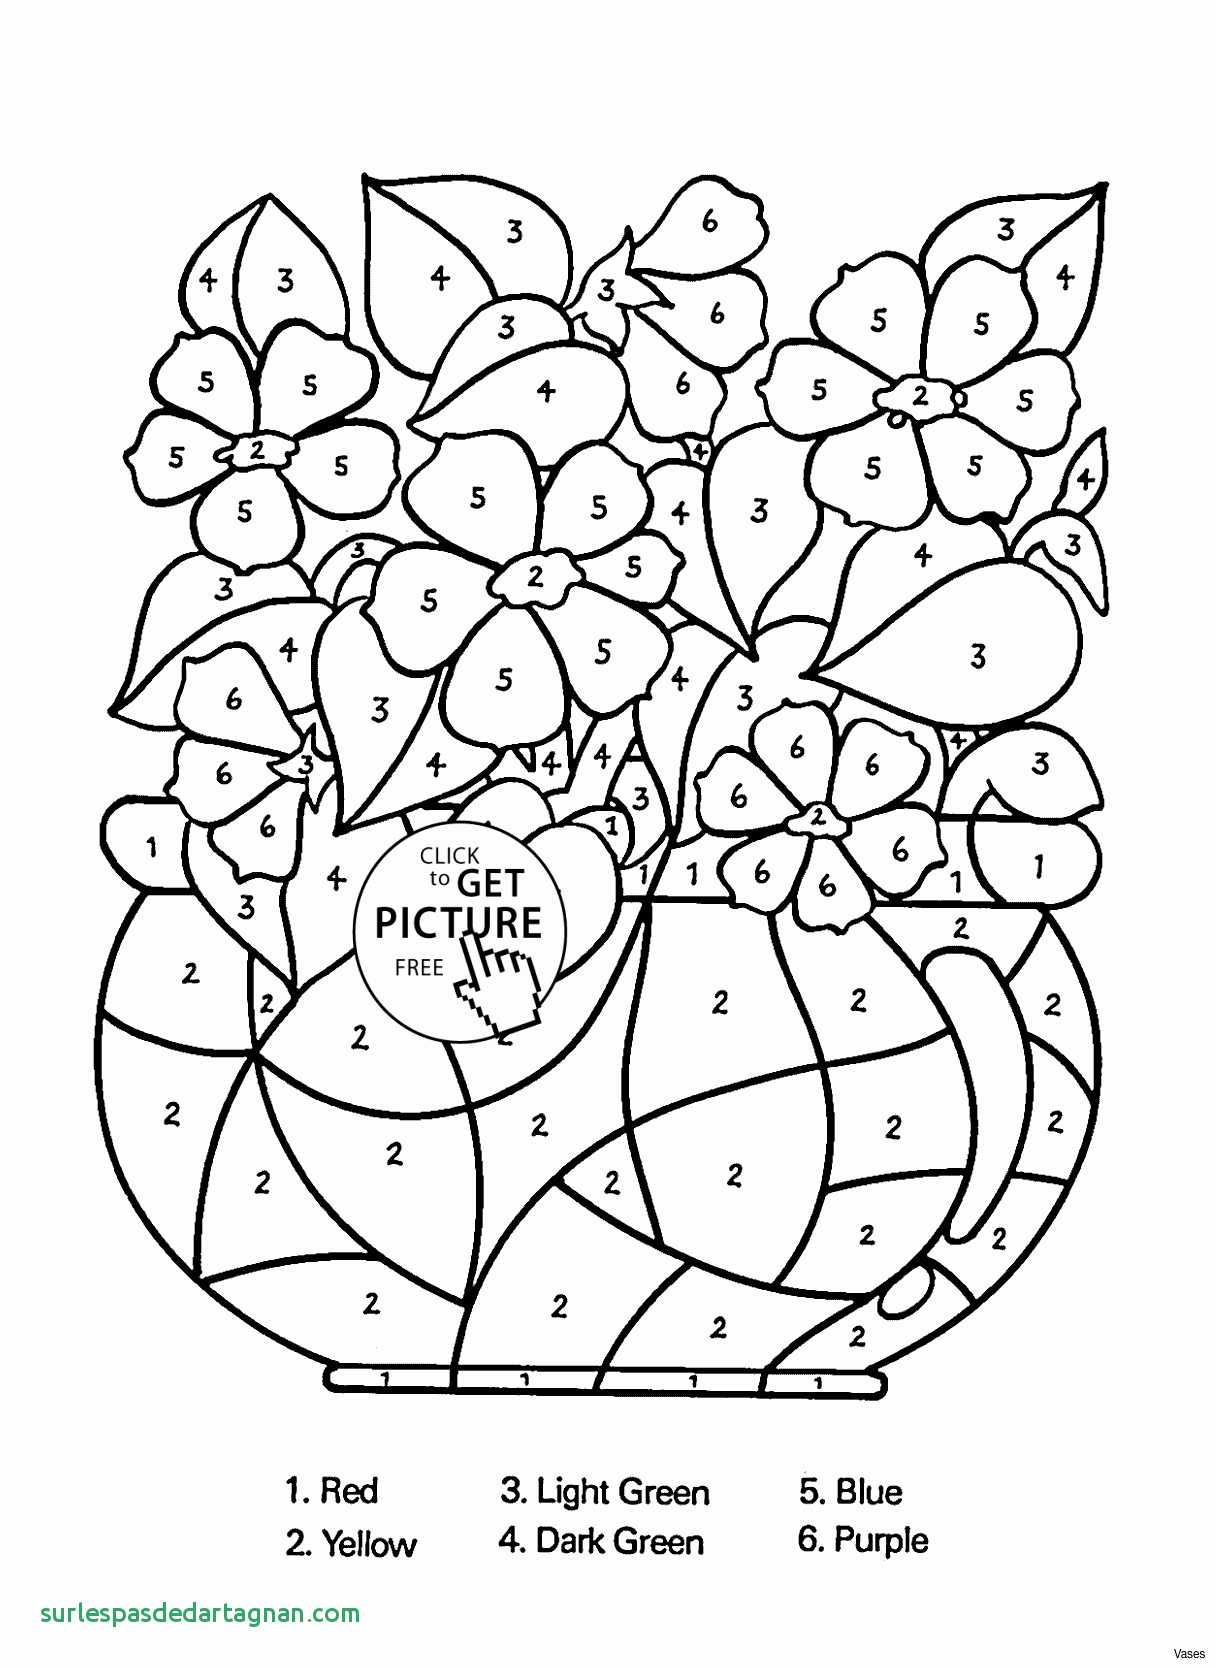 10 Nice Long Low Vase 2024 free download long low vase of plants coloring pages vases flower vase coloring page pages flowers pertaining to plants coloring pages vases flower vase coloring page pages flowers in a top i 0d dot